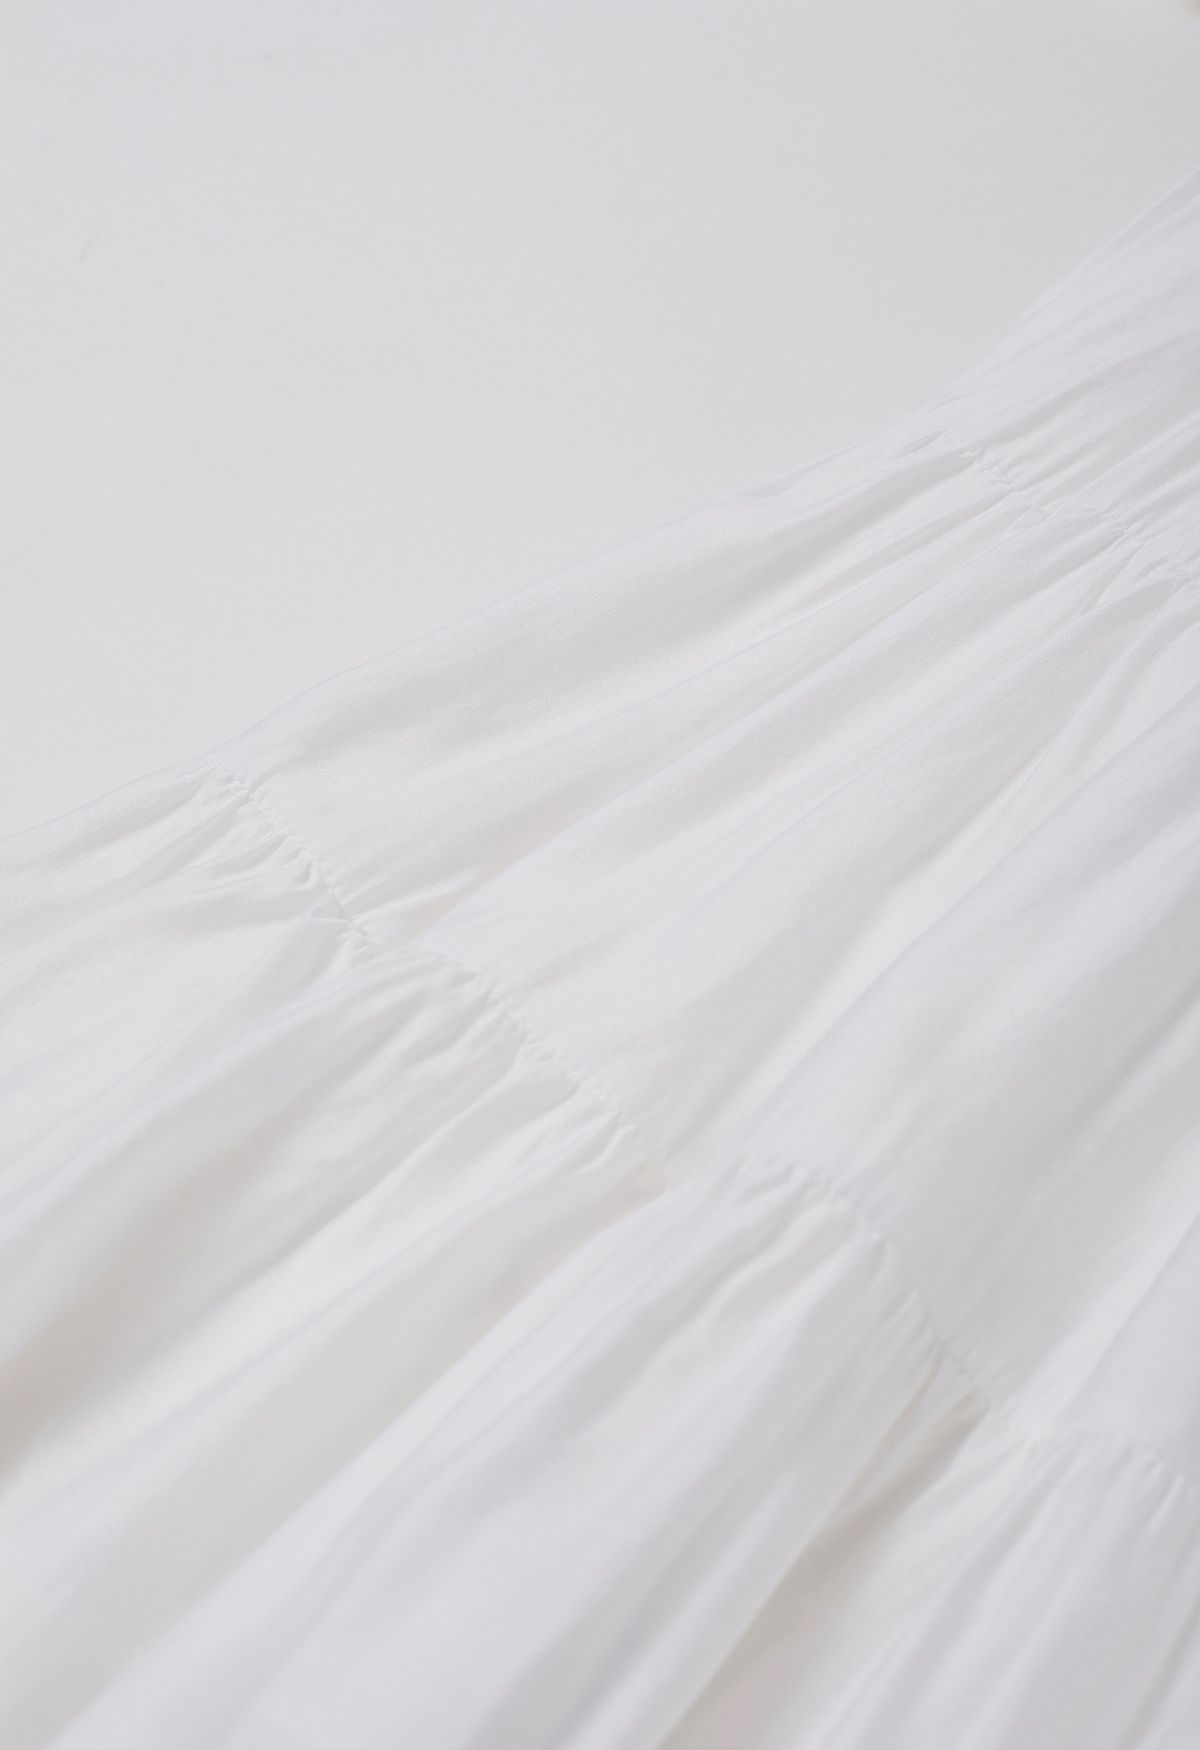 Fringe Detail Tiered Sleeve Mini Dress in White